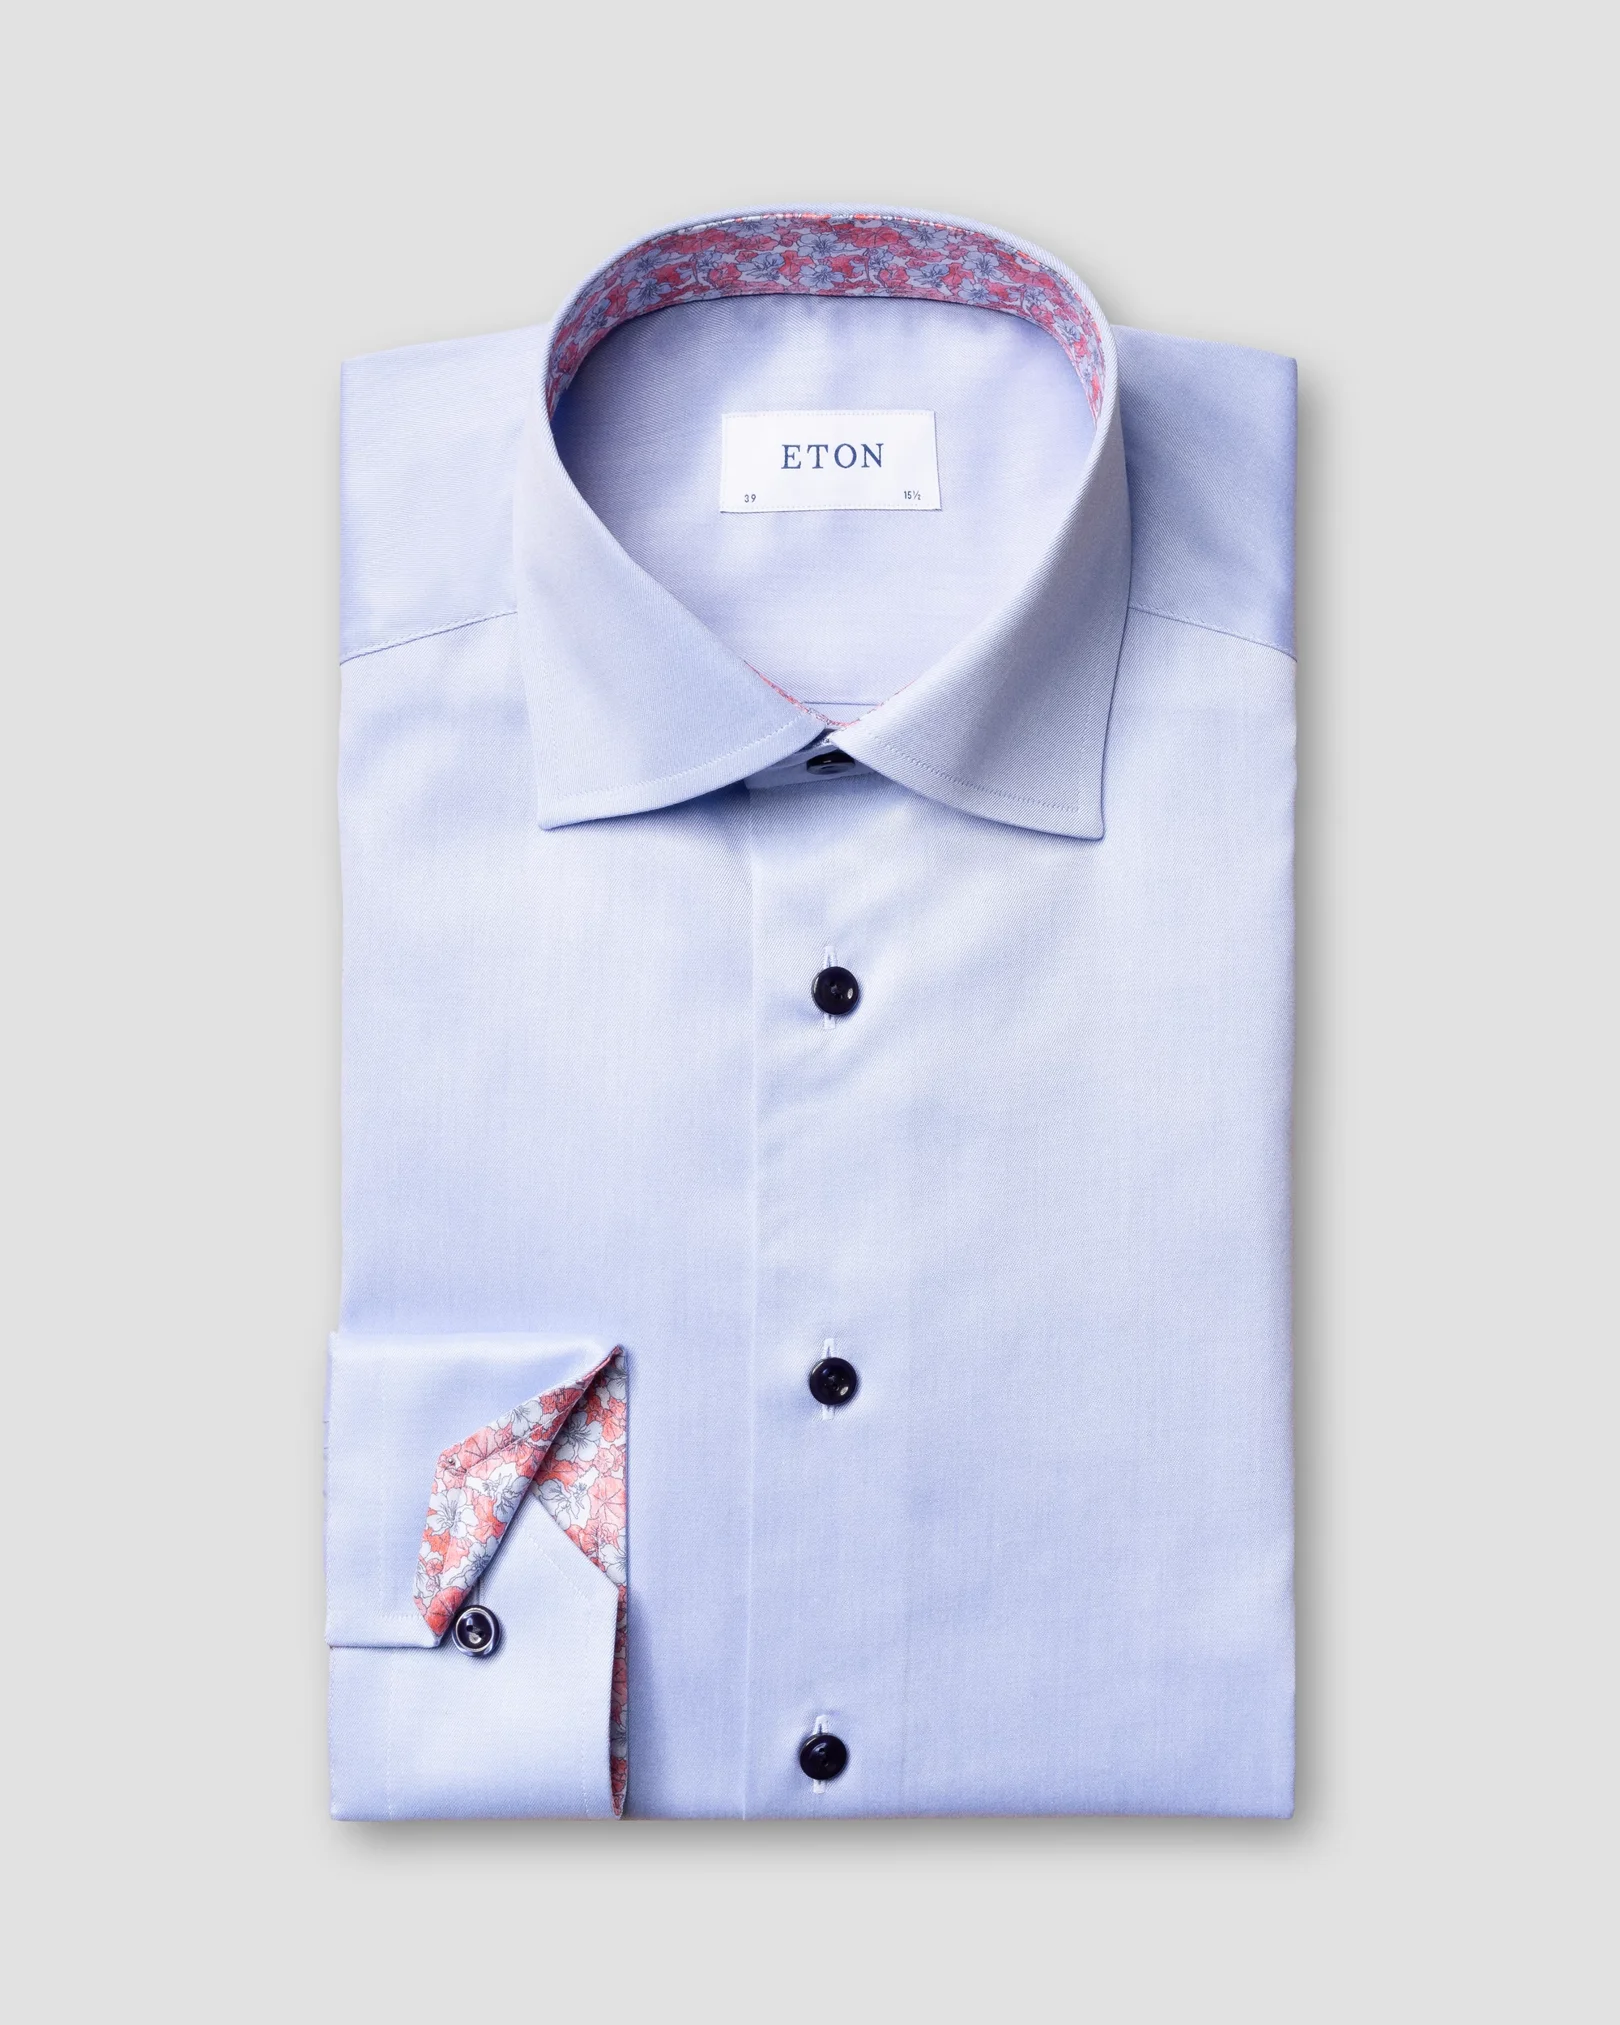 Eton - light blue twill shirt printed details